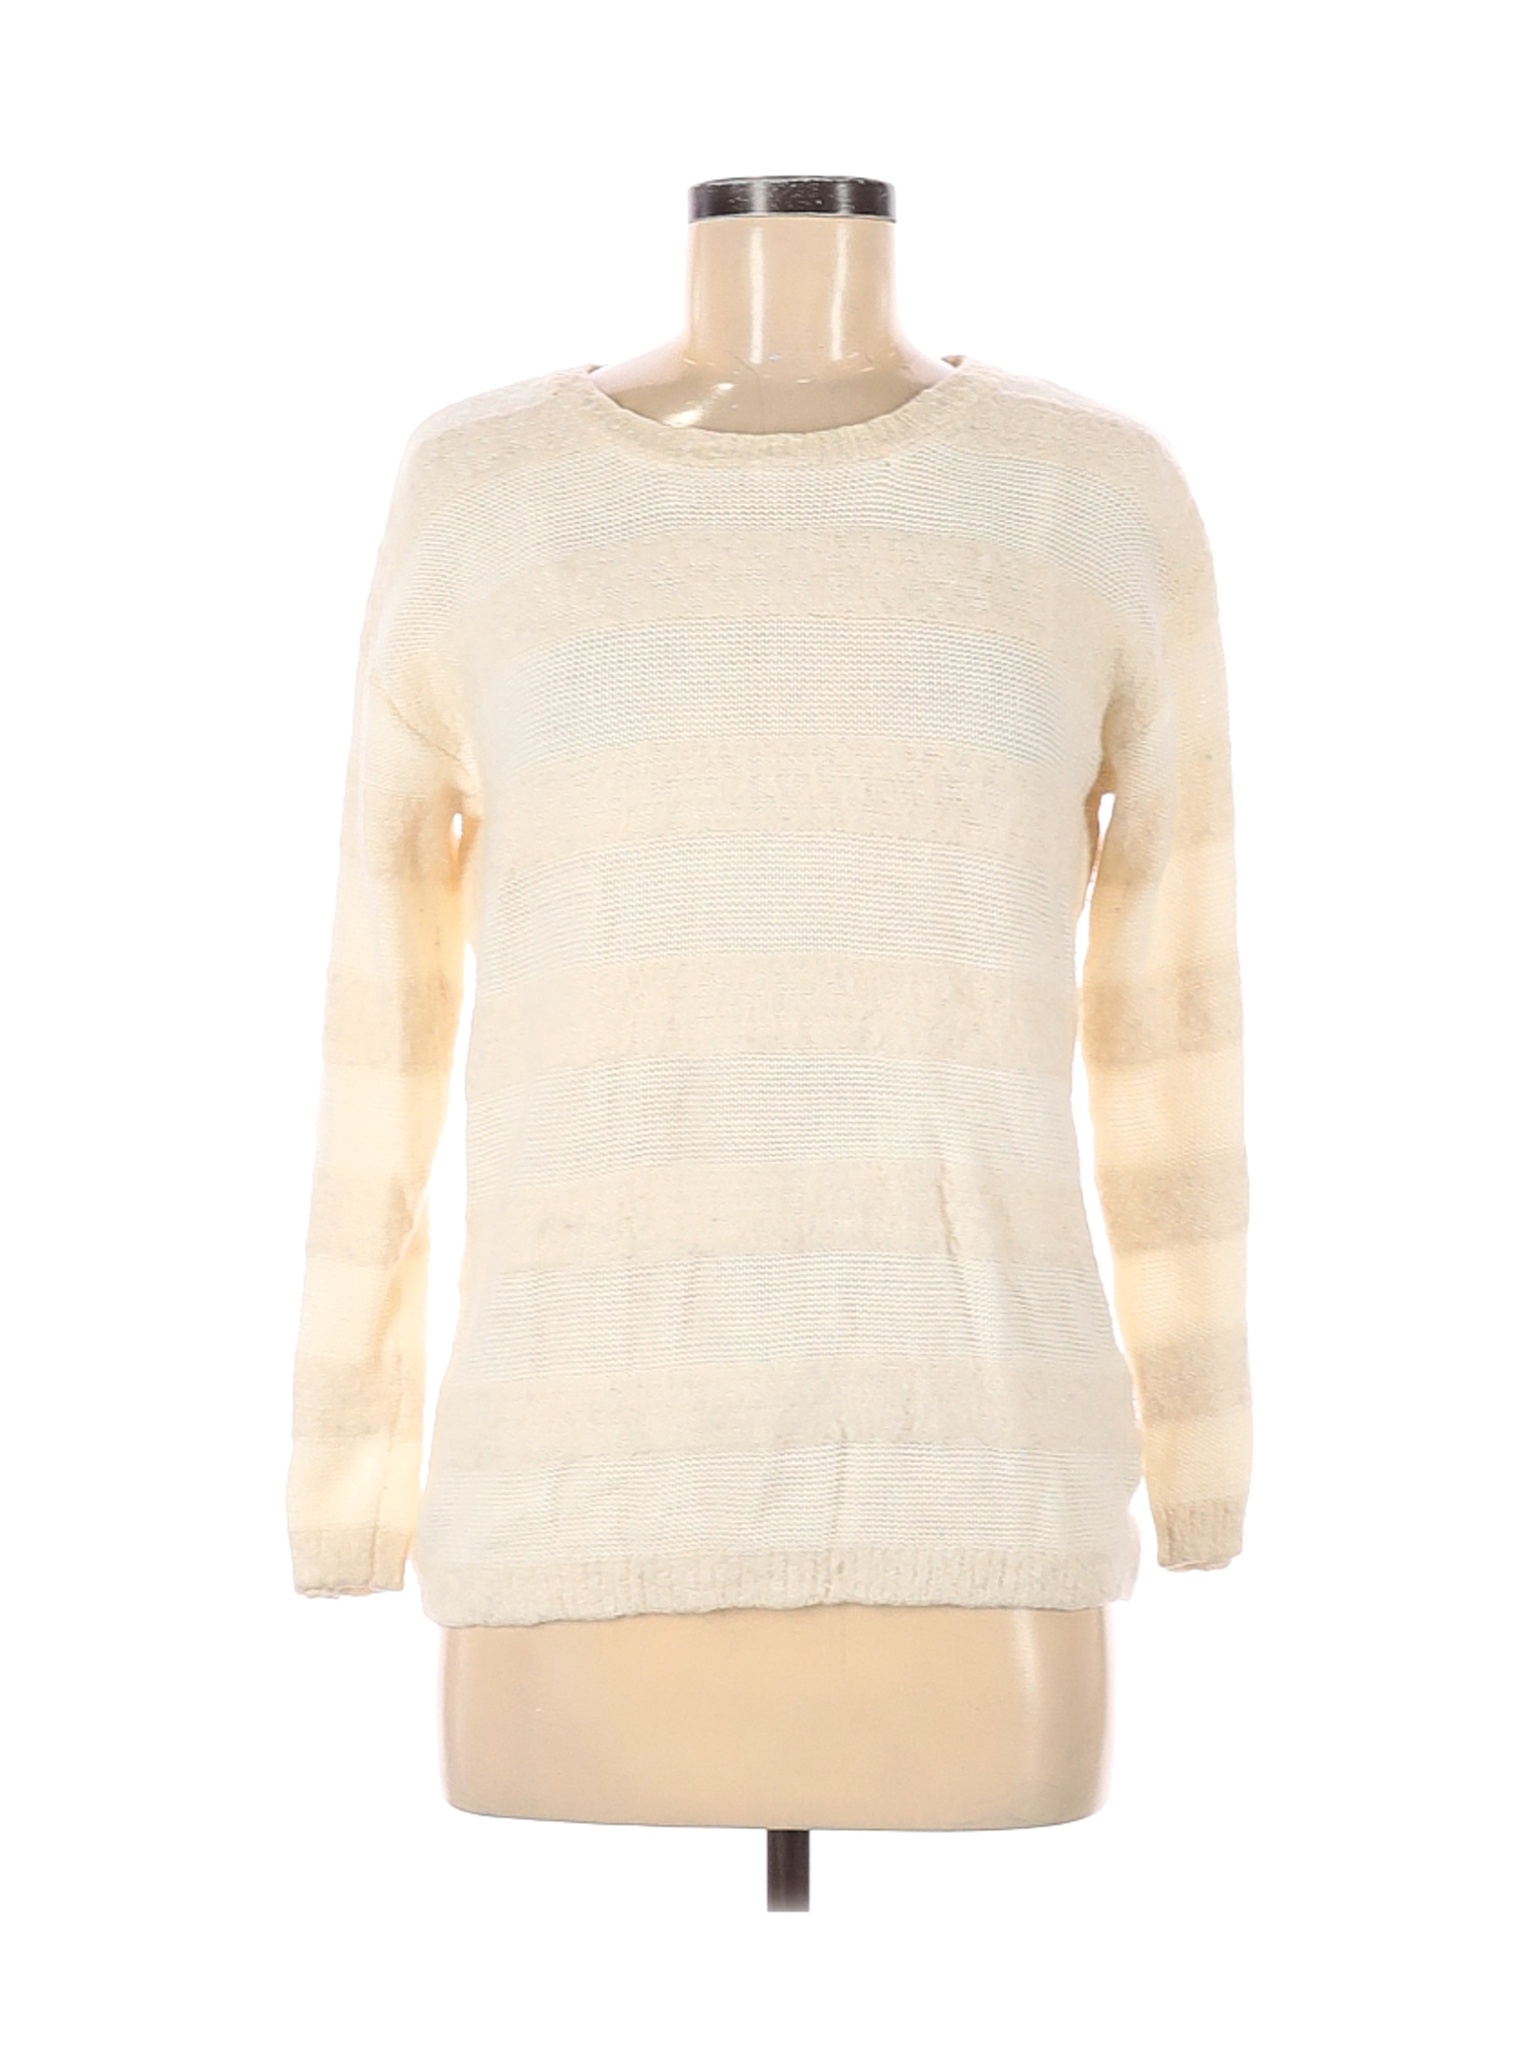 Joseph A. Women Ivory Pullover Sweater M | eBay